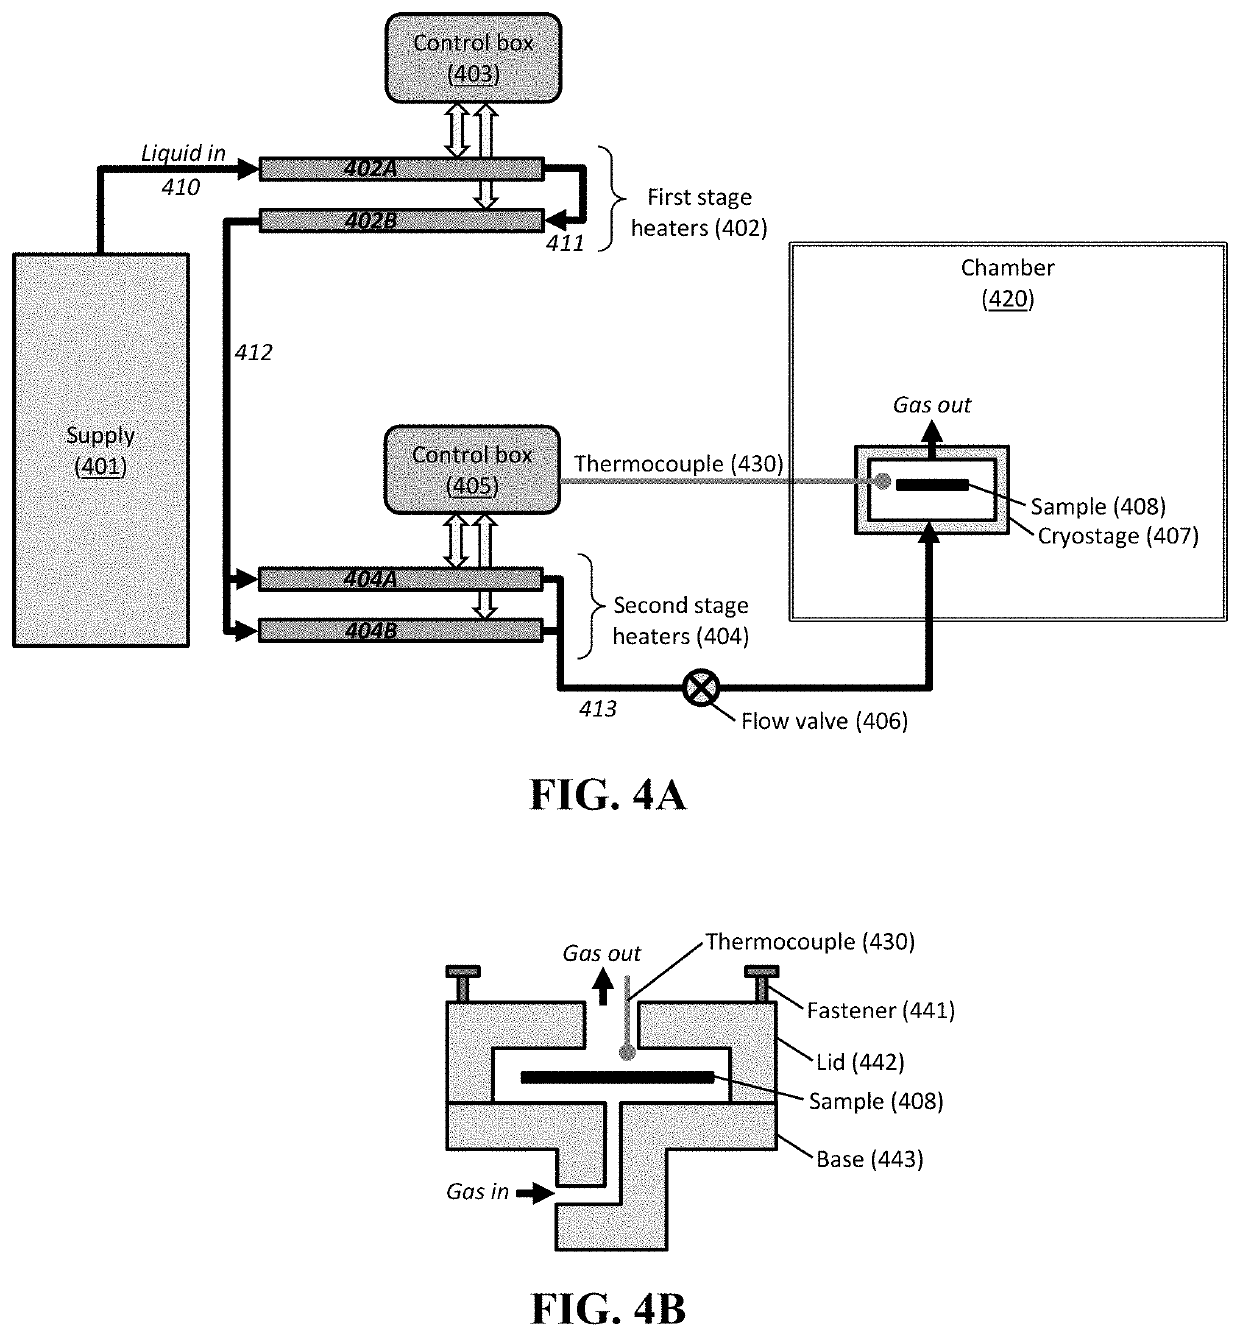 Cryogenic heating system